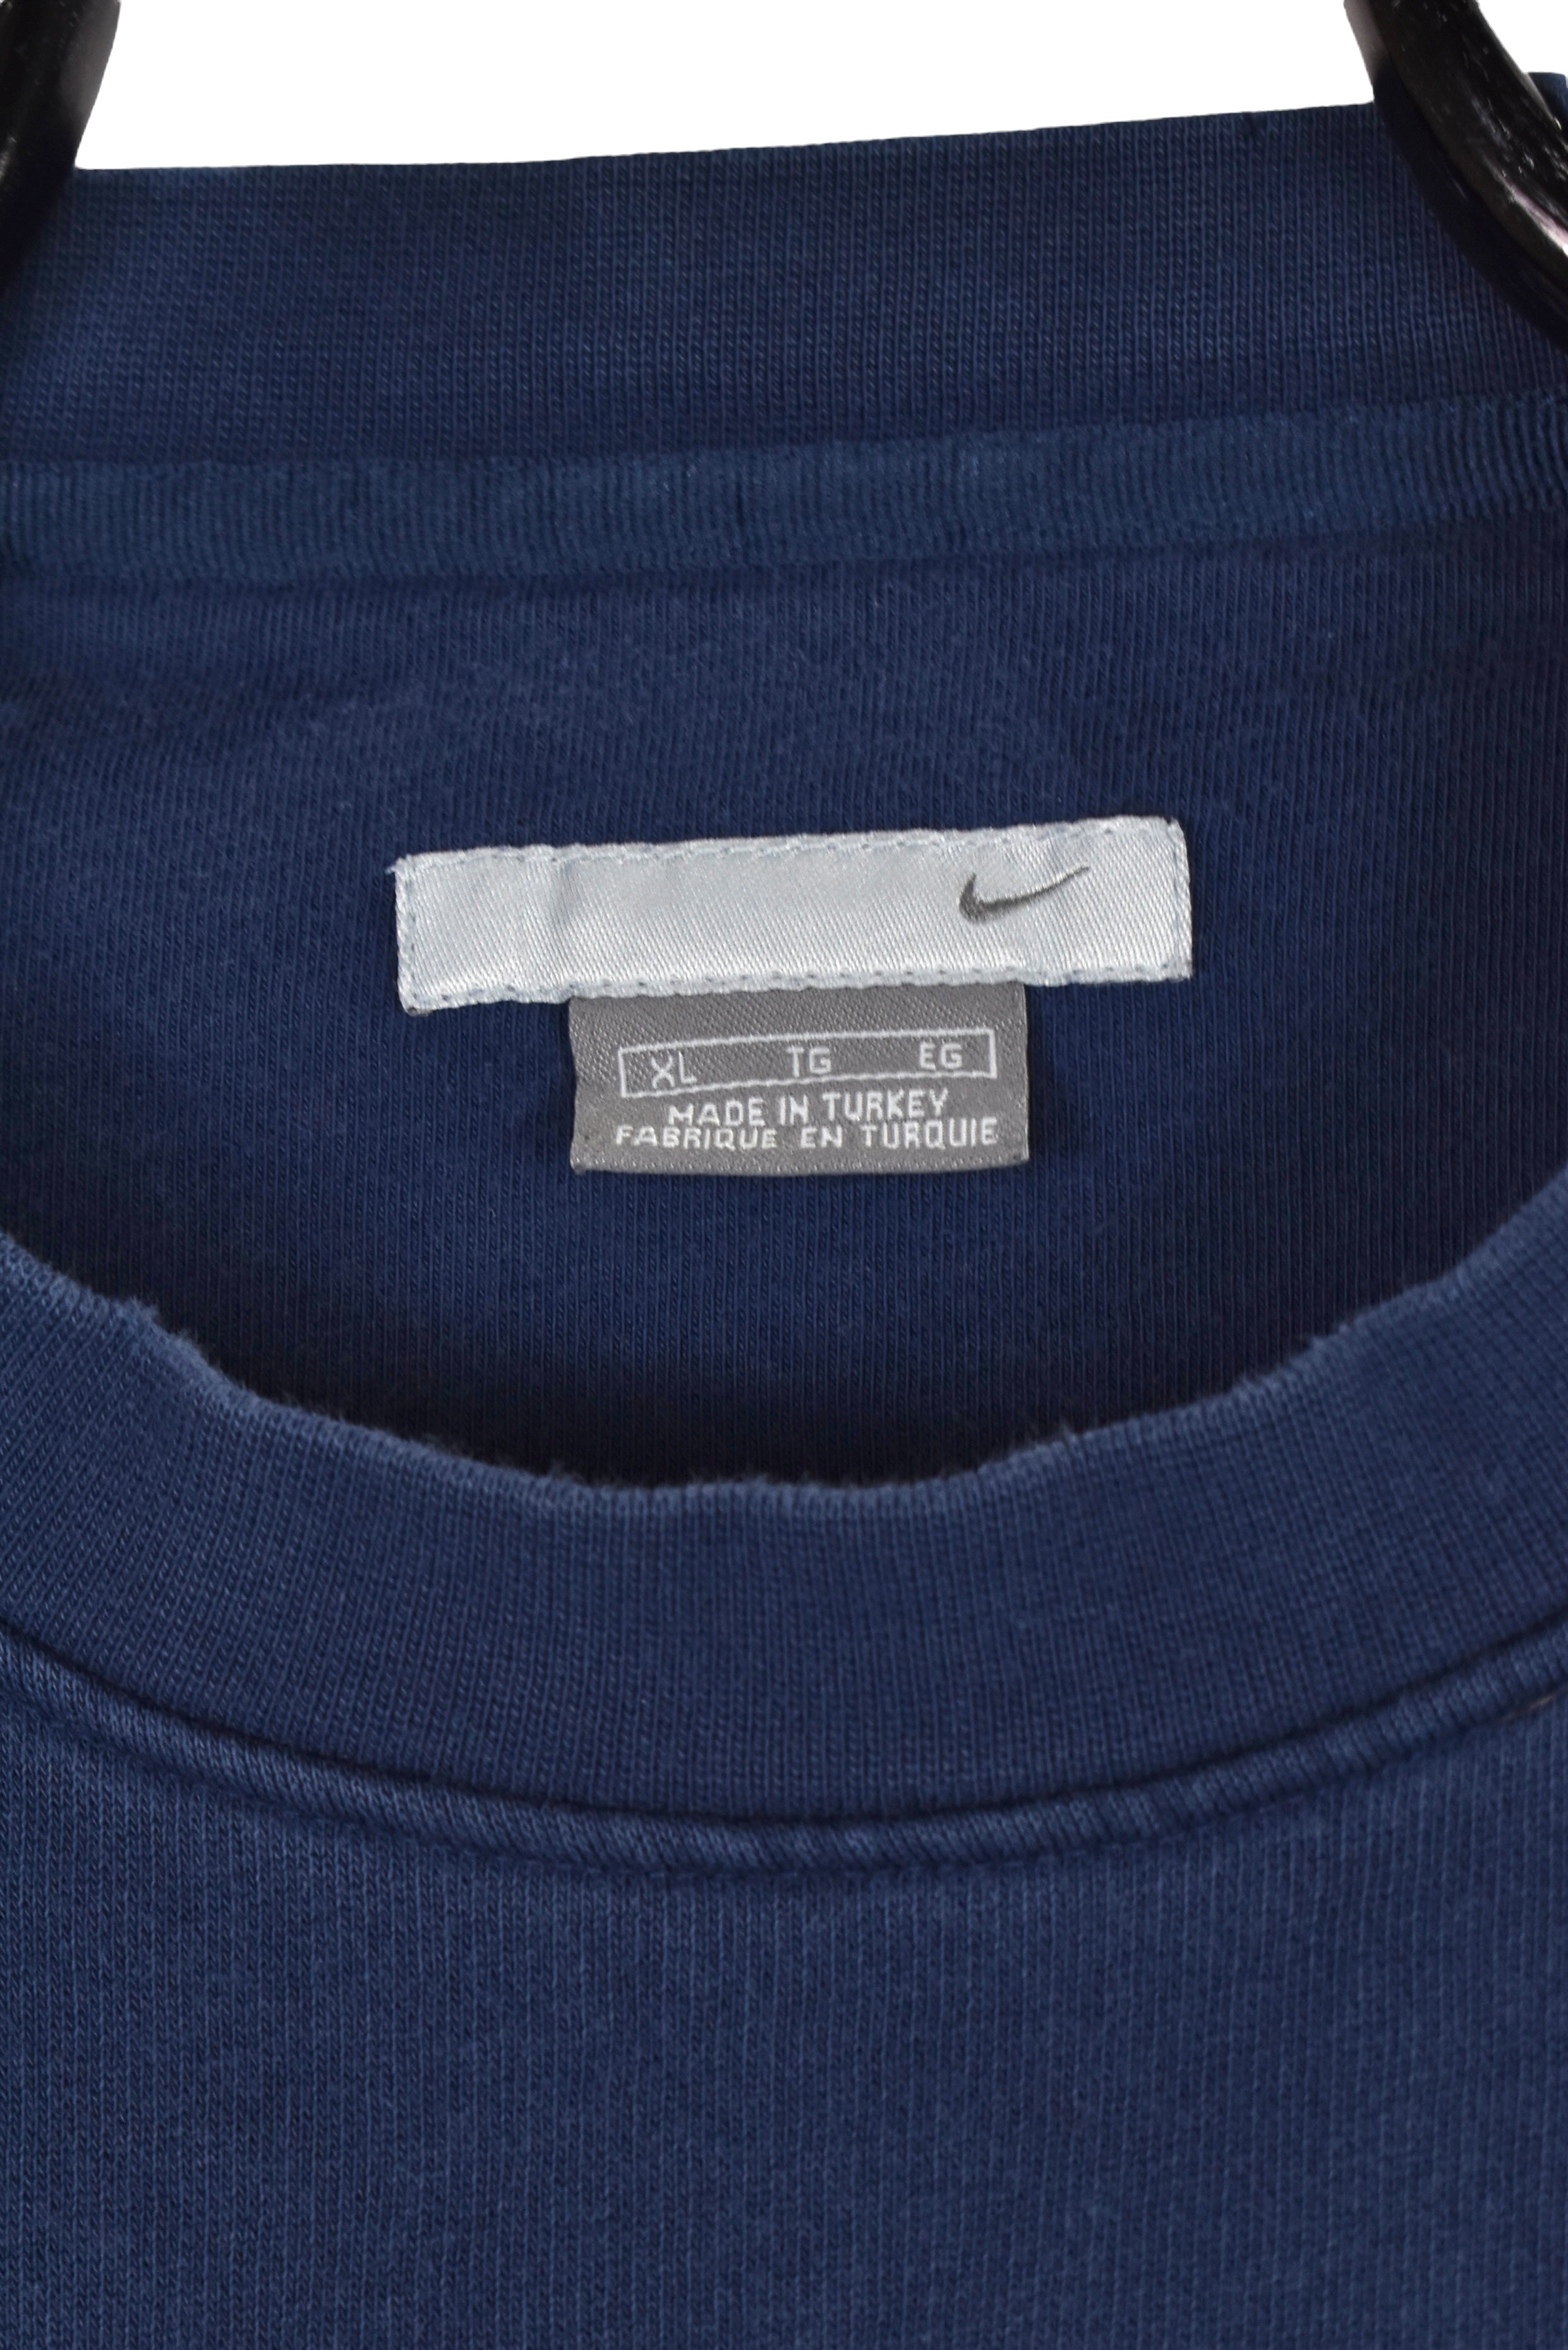 Vintage Nike sweatshirt (XL), navy embroidered crewneck